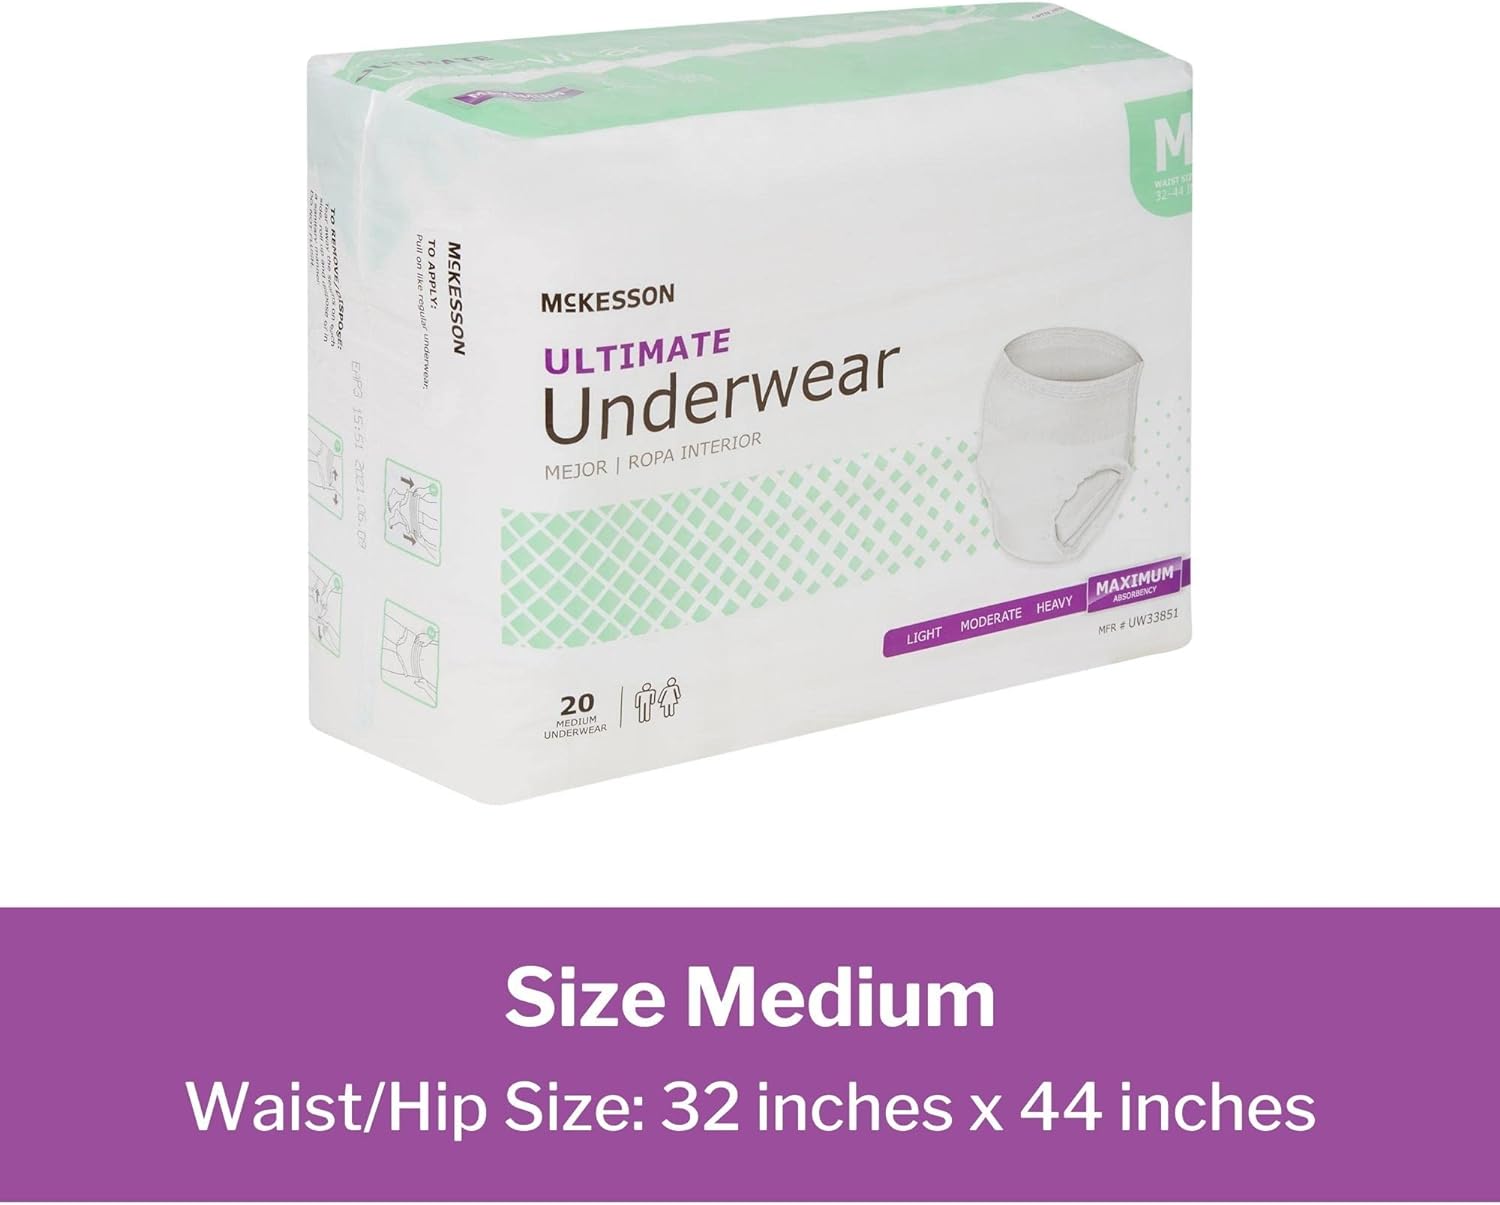 McKesson Ultimate Underwear, Incontinence, Maximum Absorbency, Medium, 20 Count